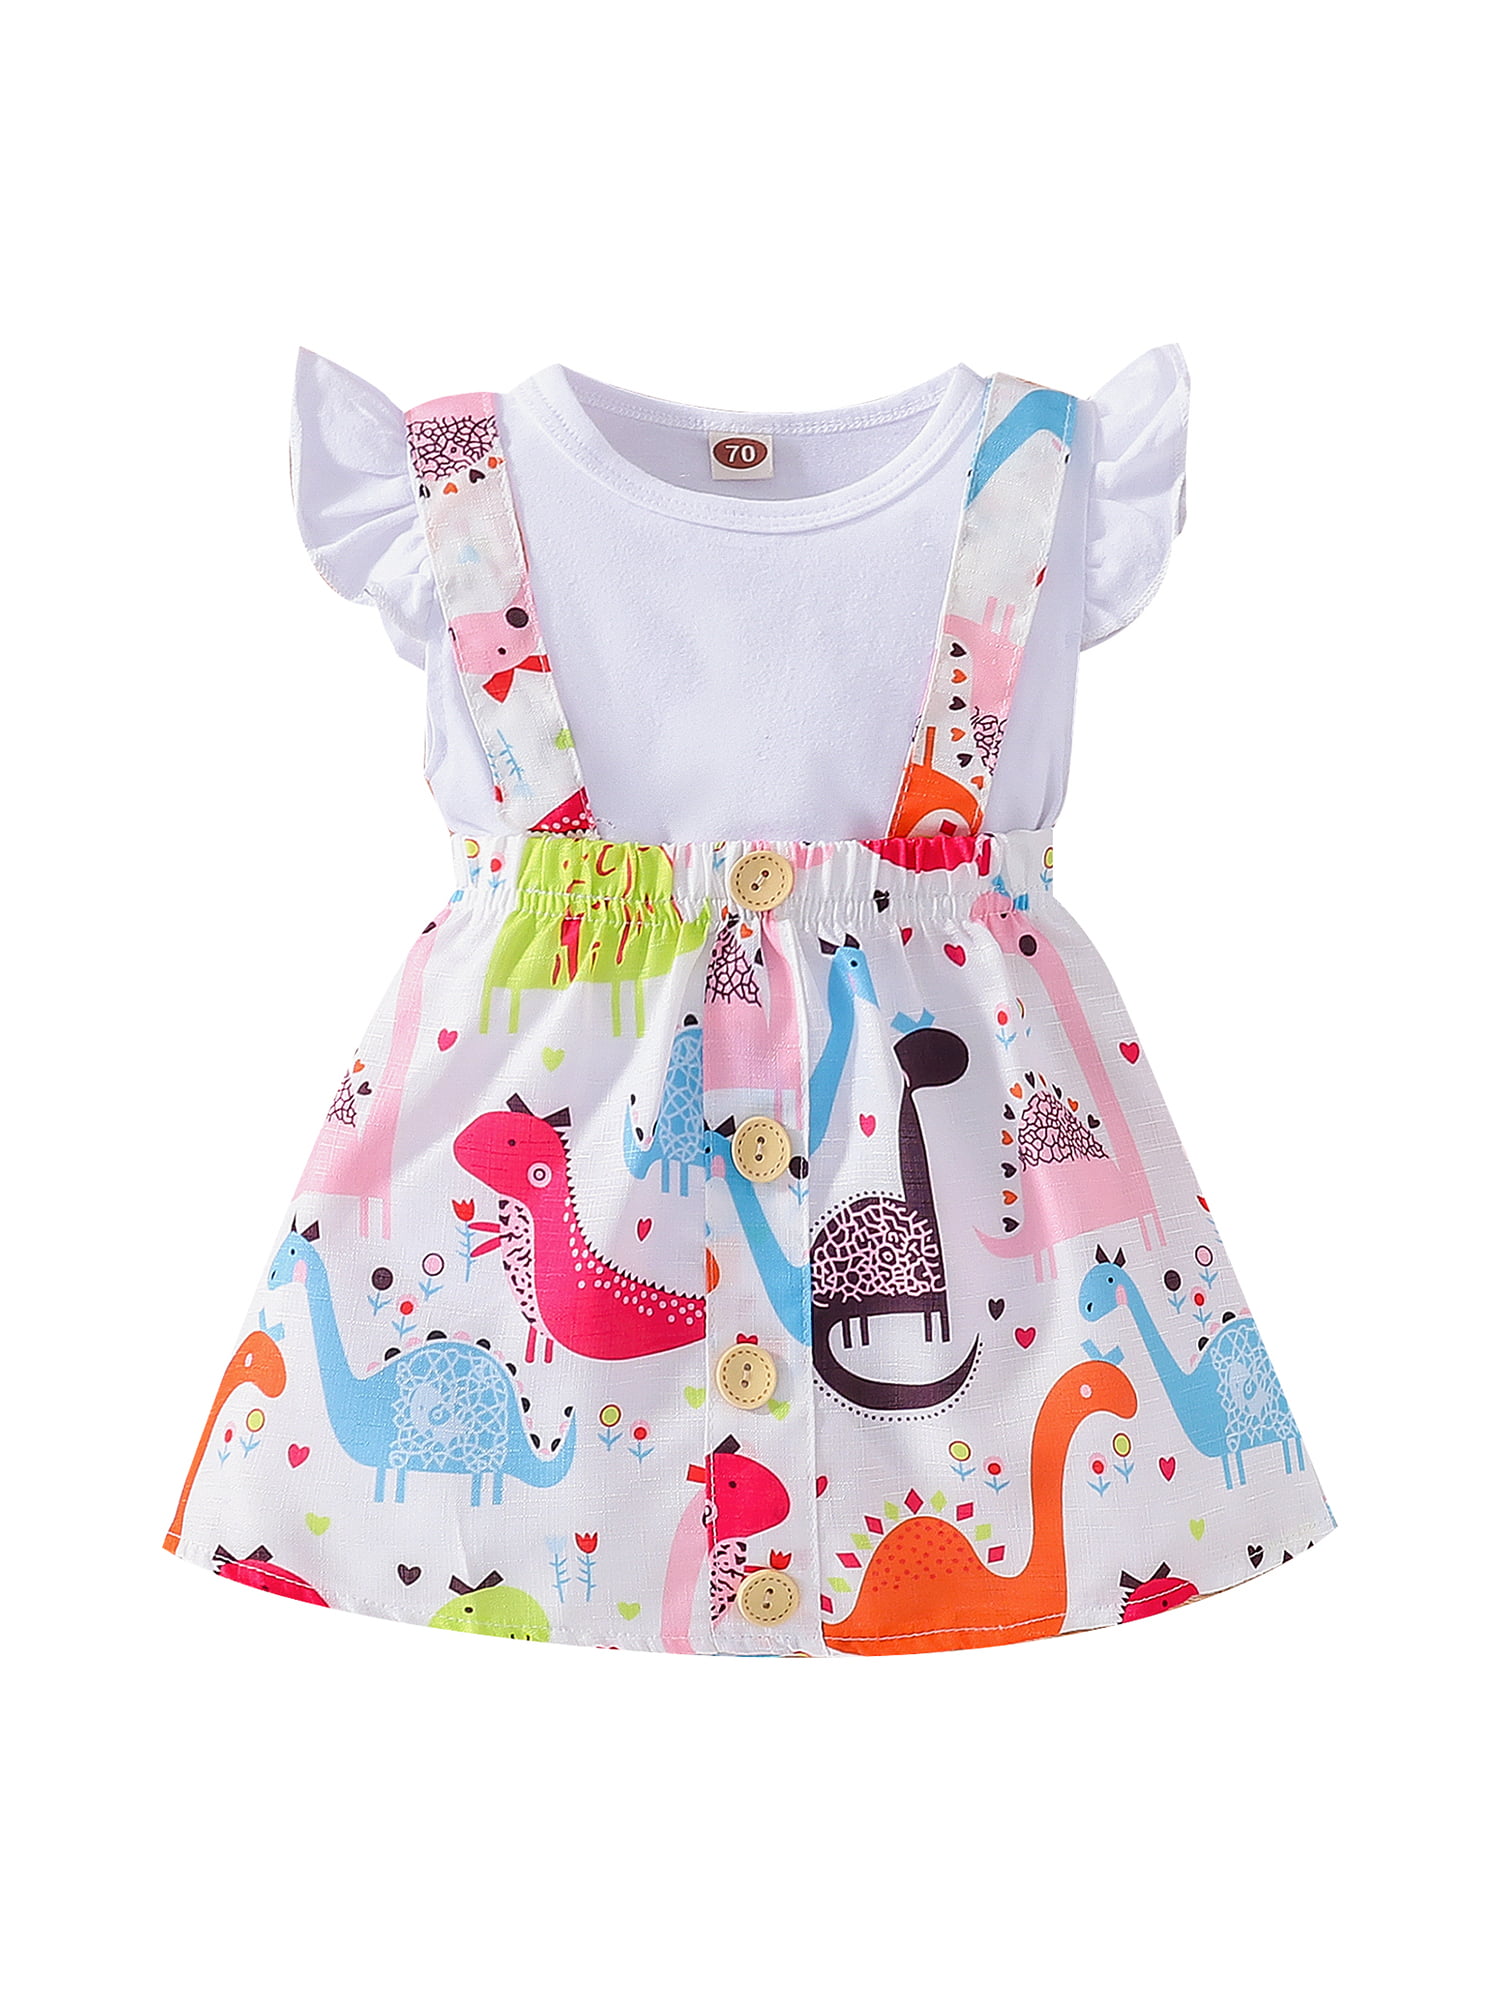 2pcs Newborn Baby Girl Outfits Romper Tops+Suspender Skirt Dress Overalls Set 